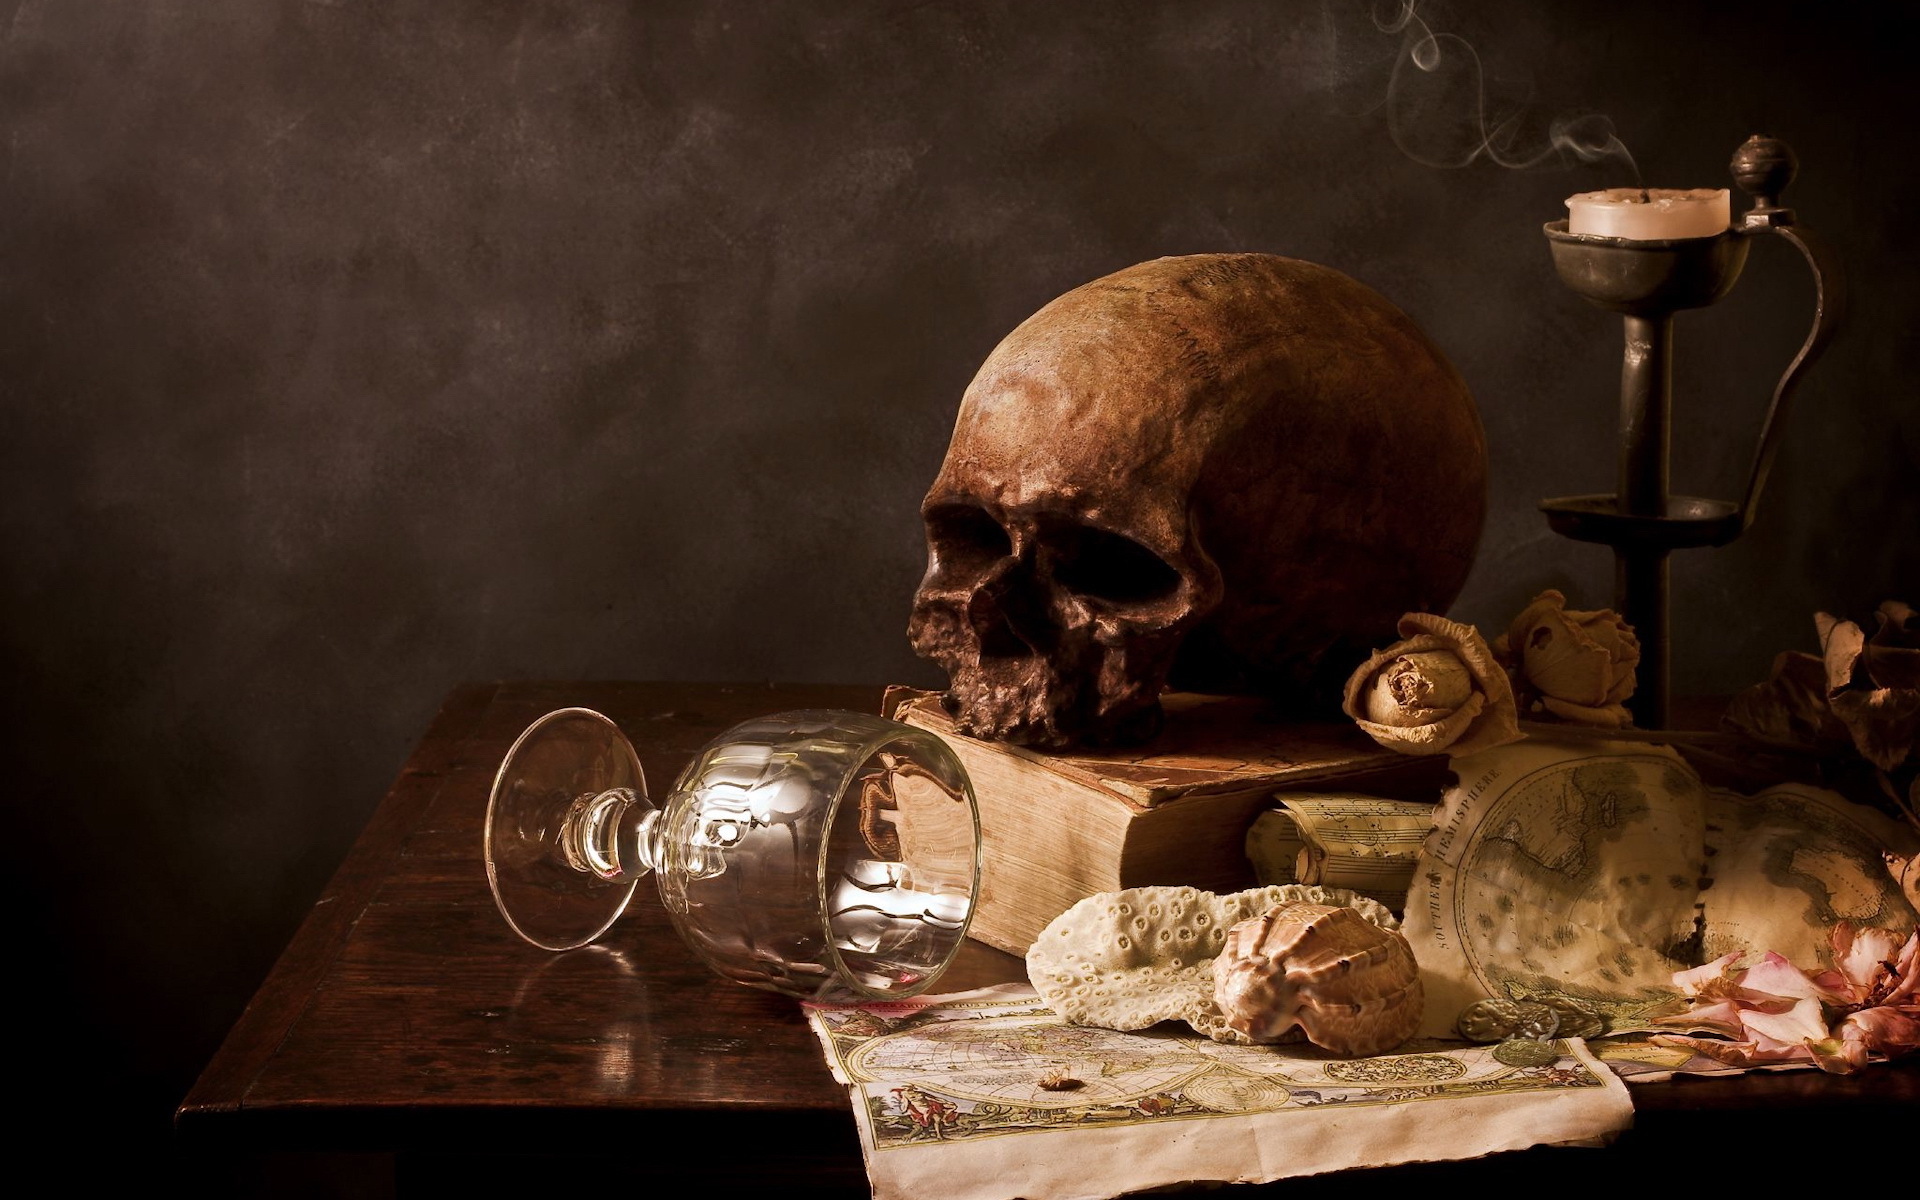 skeletons, death, art photo, objects, still life, orange phone background